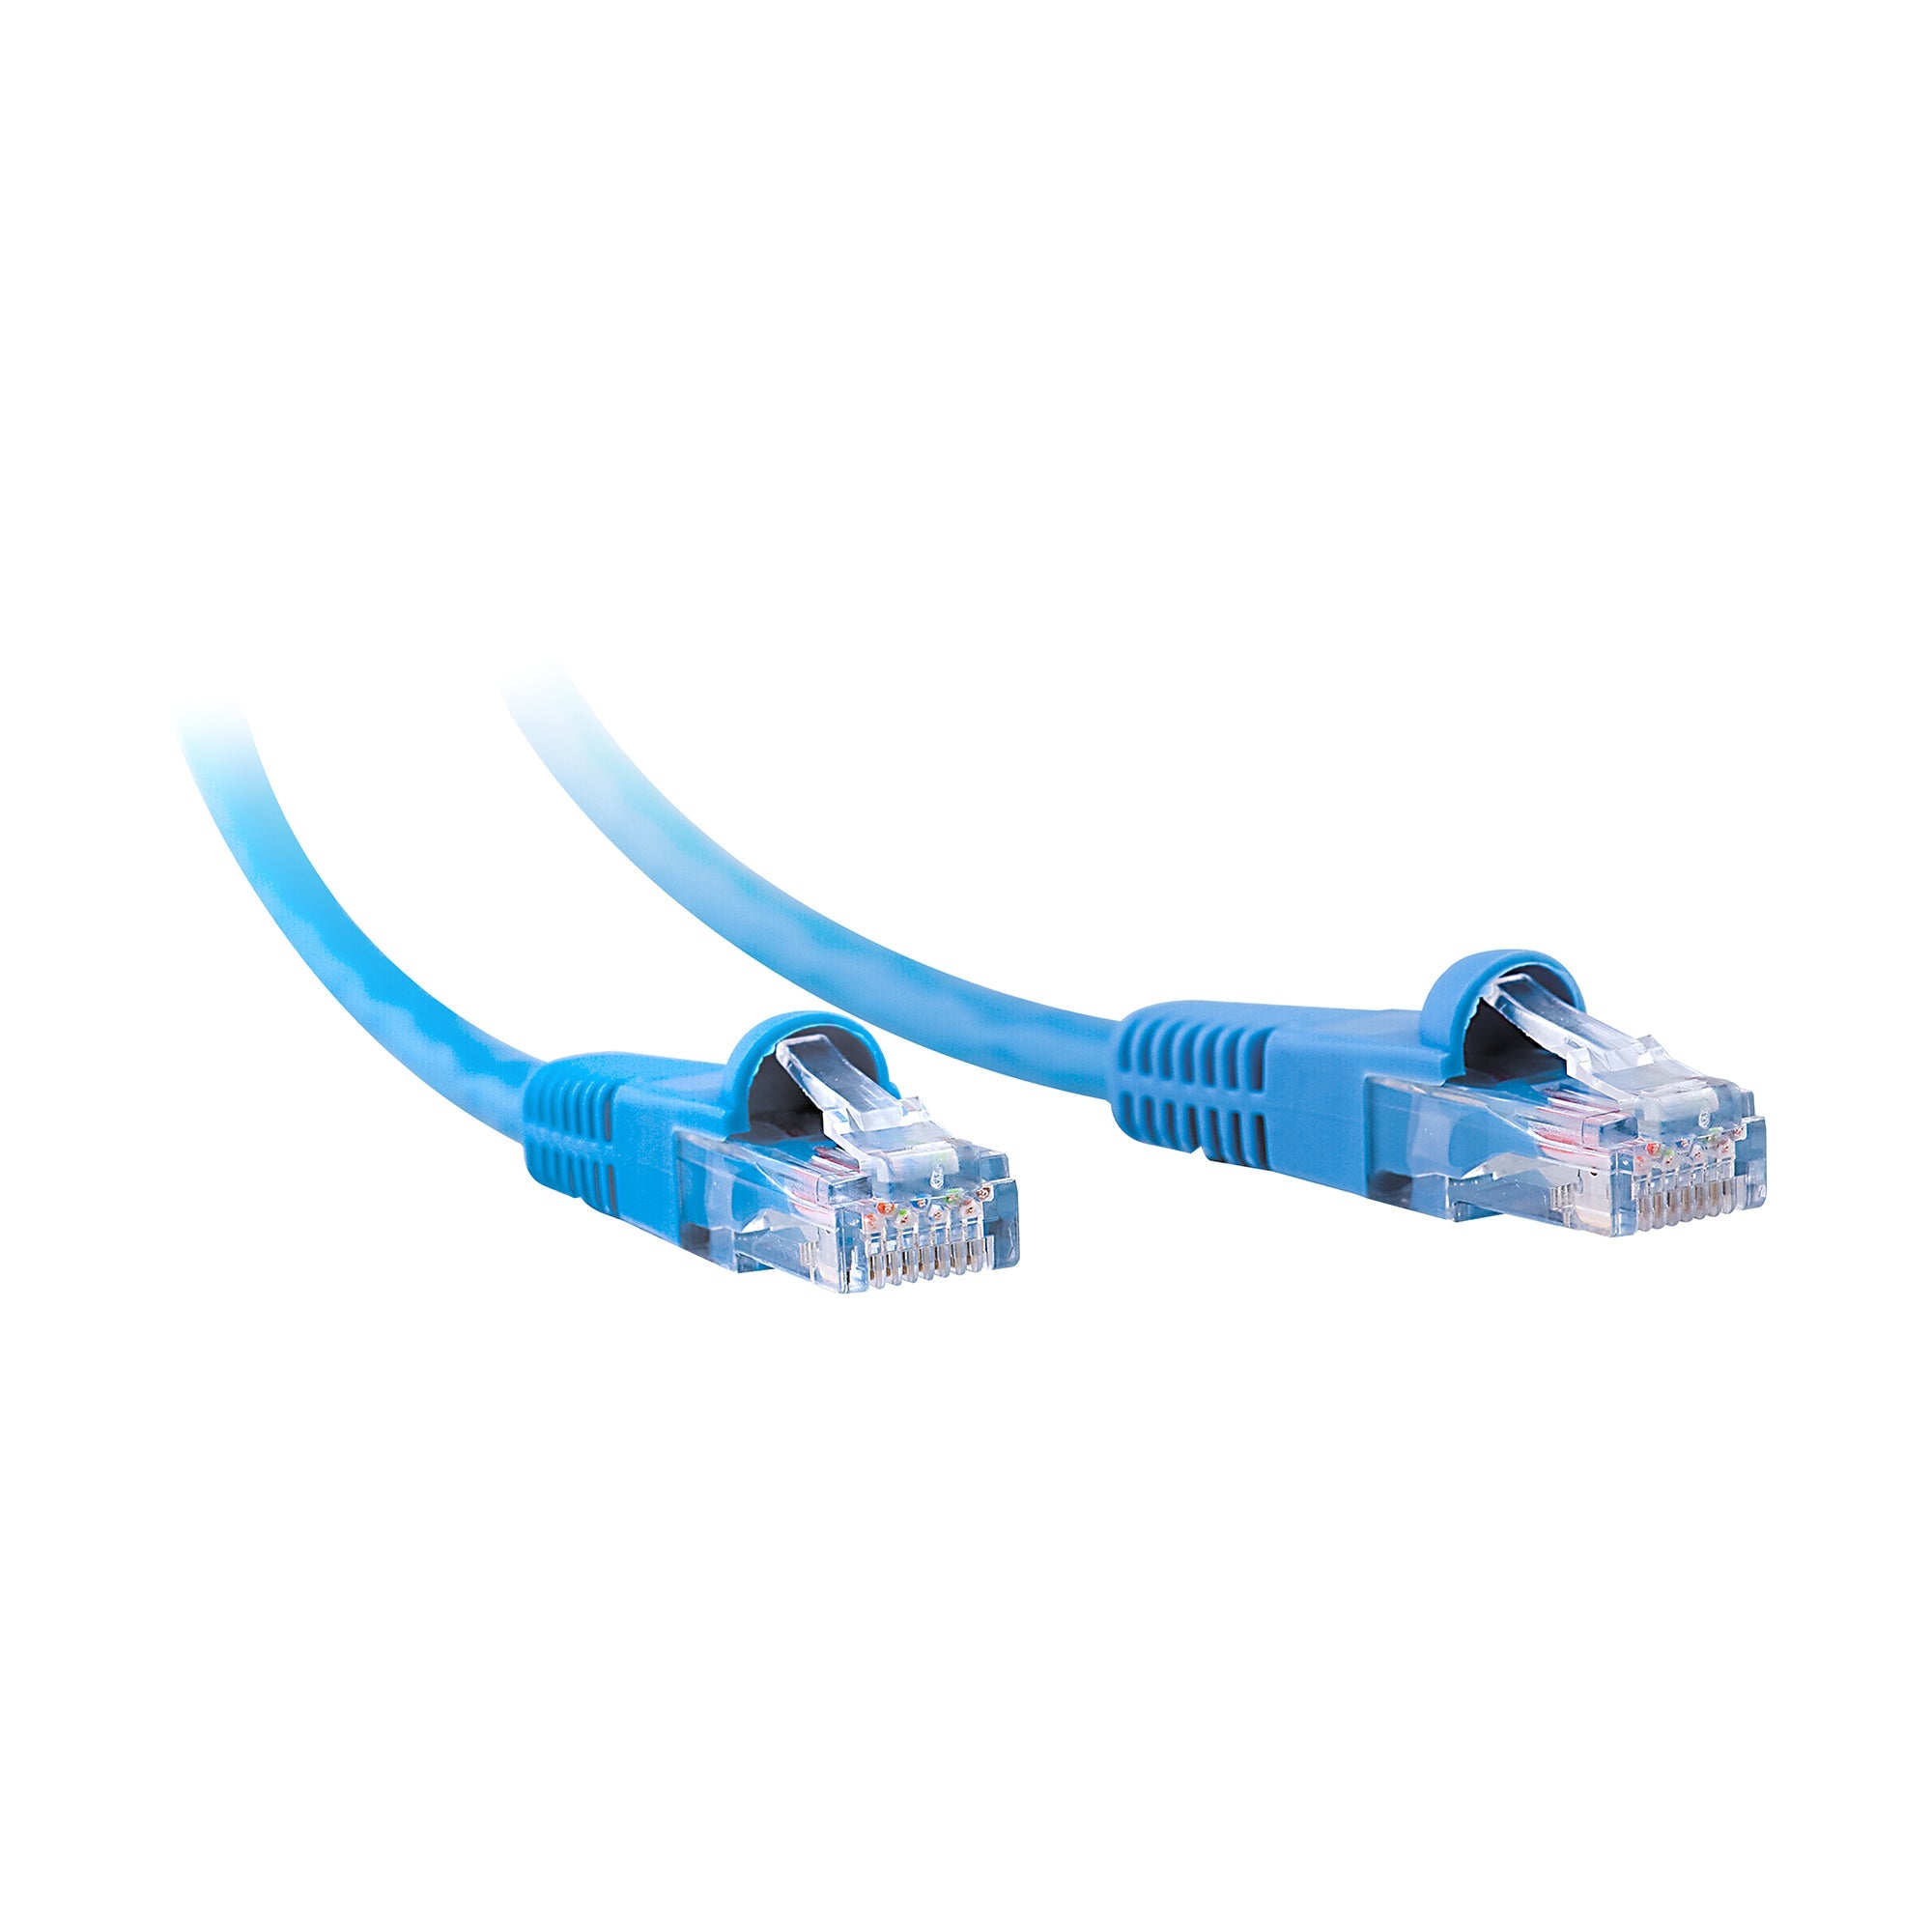 15m CAT6 RJ45 Ethernet Network Cable